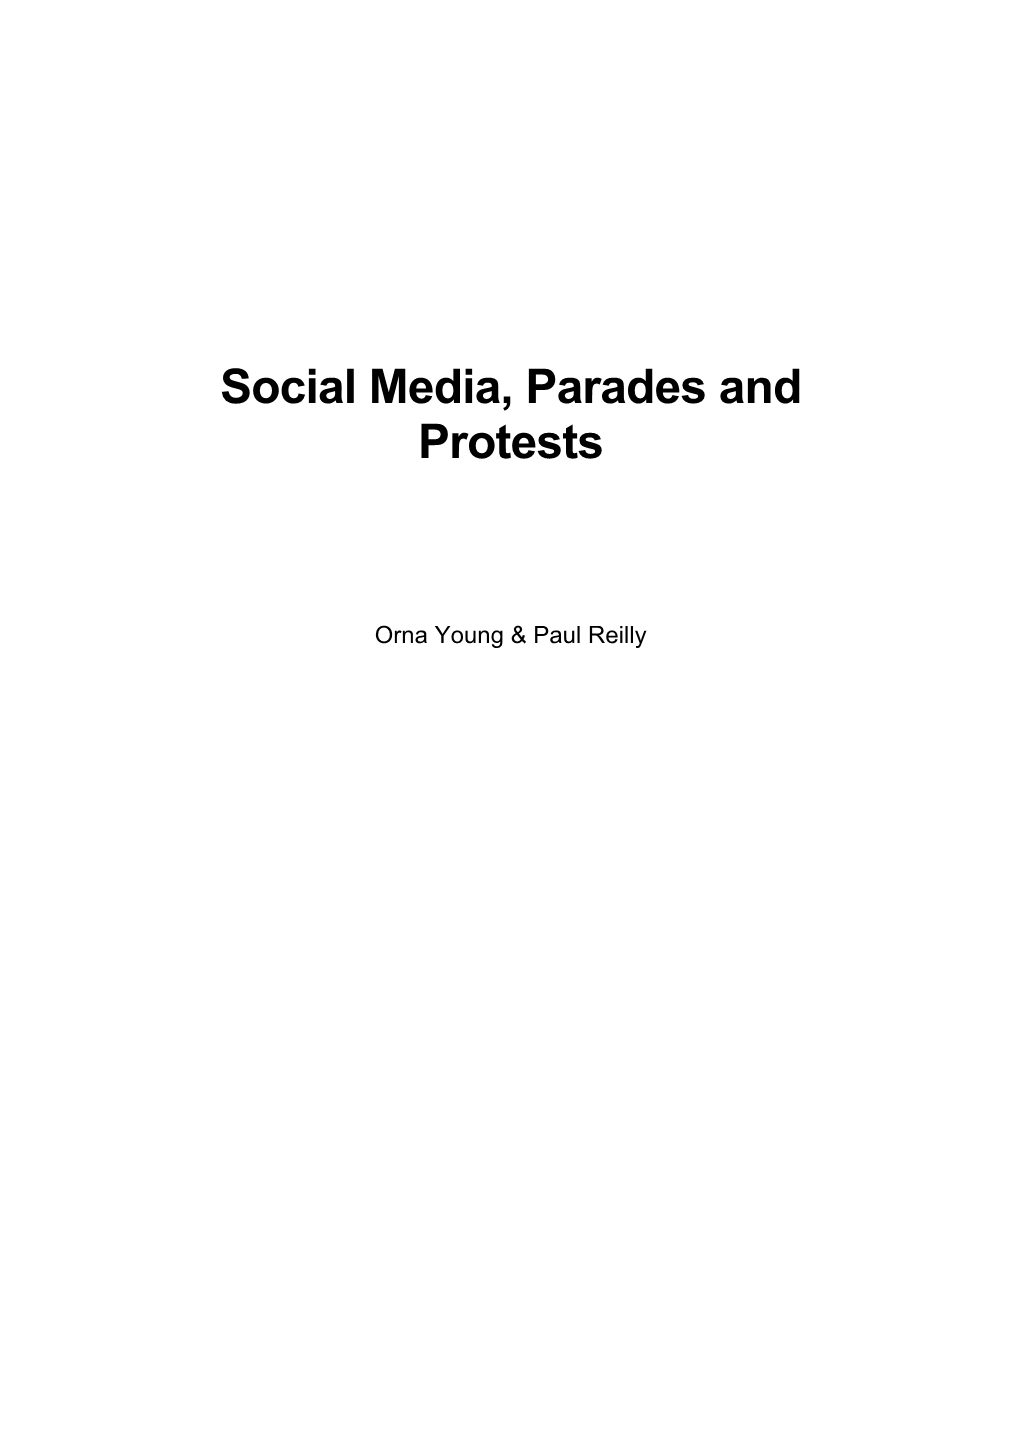 Social Media, Parades and Protests